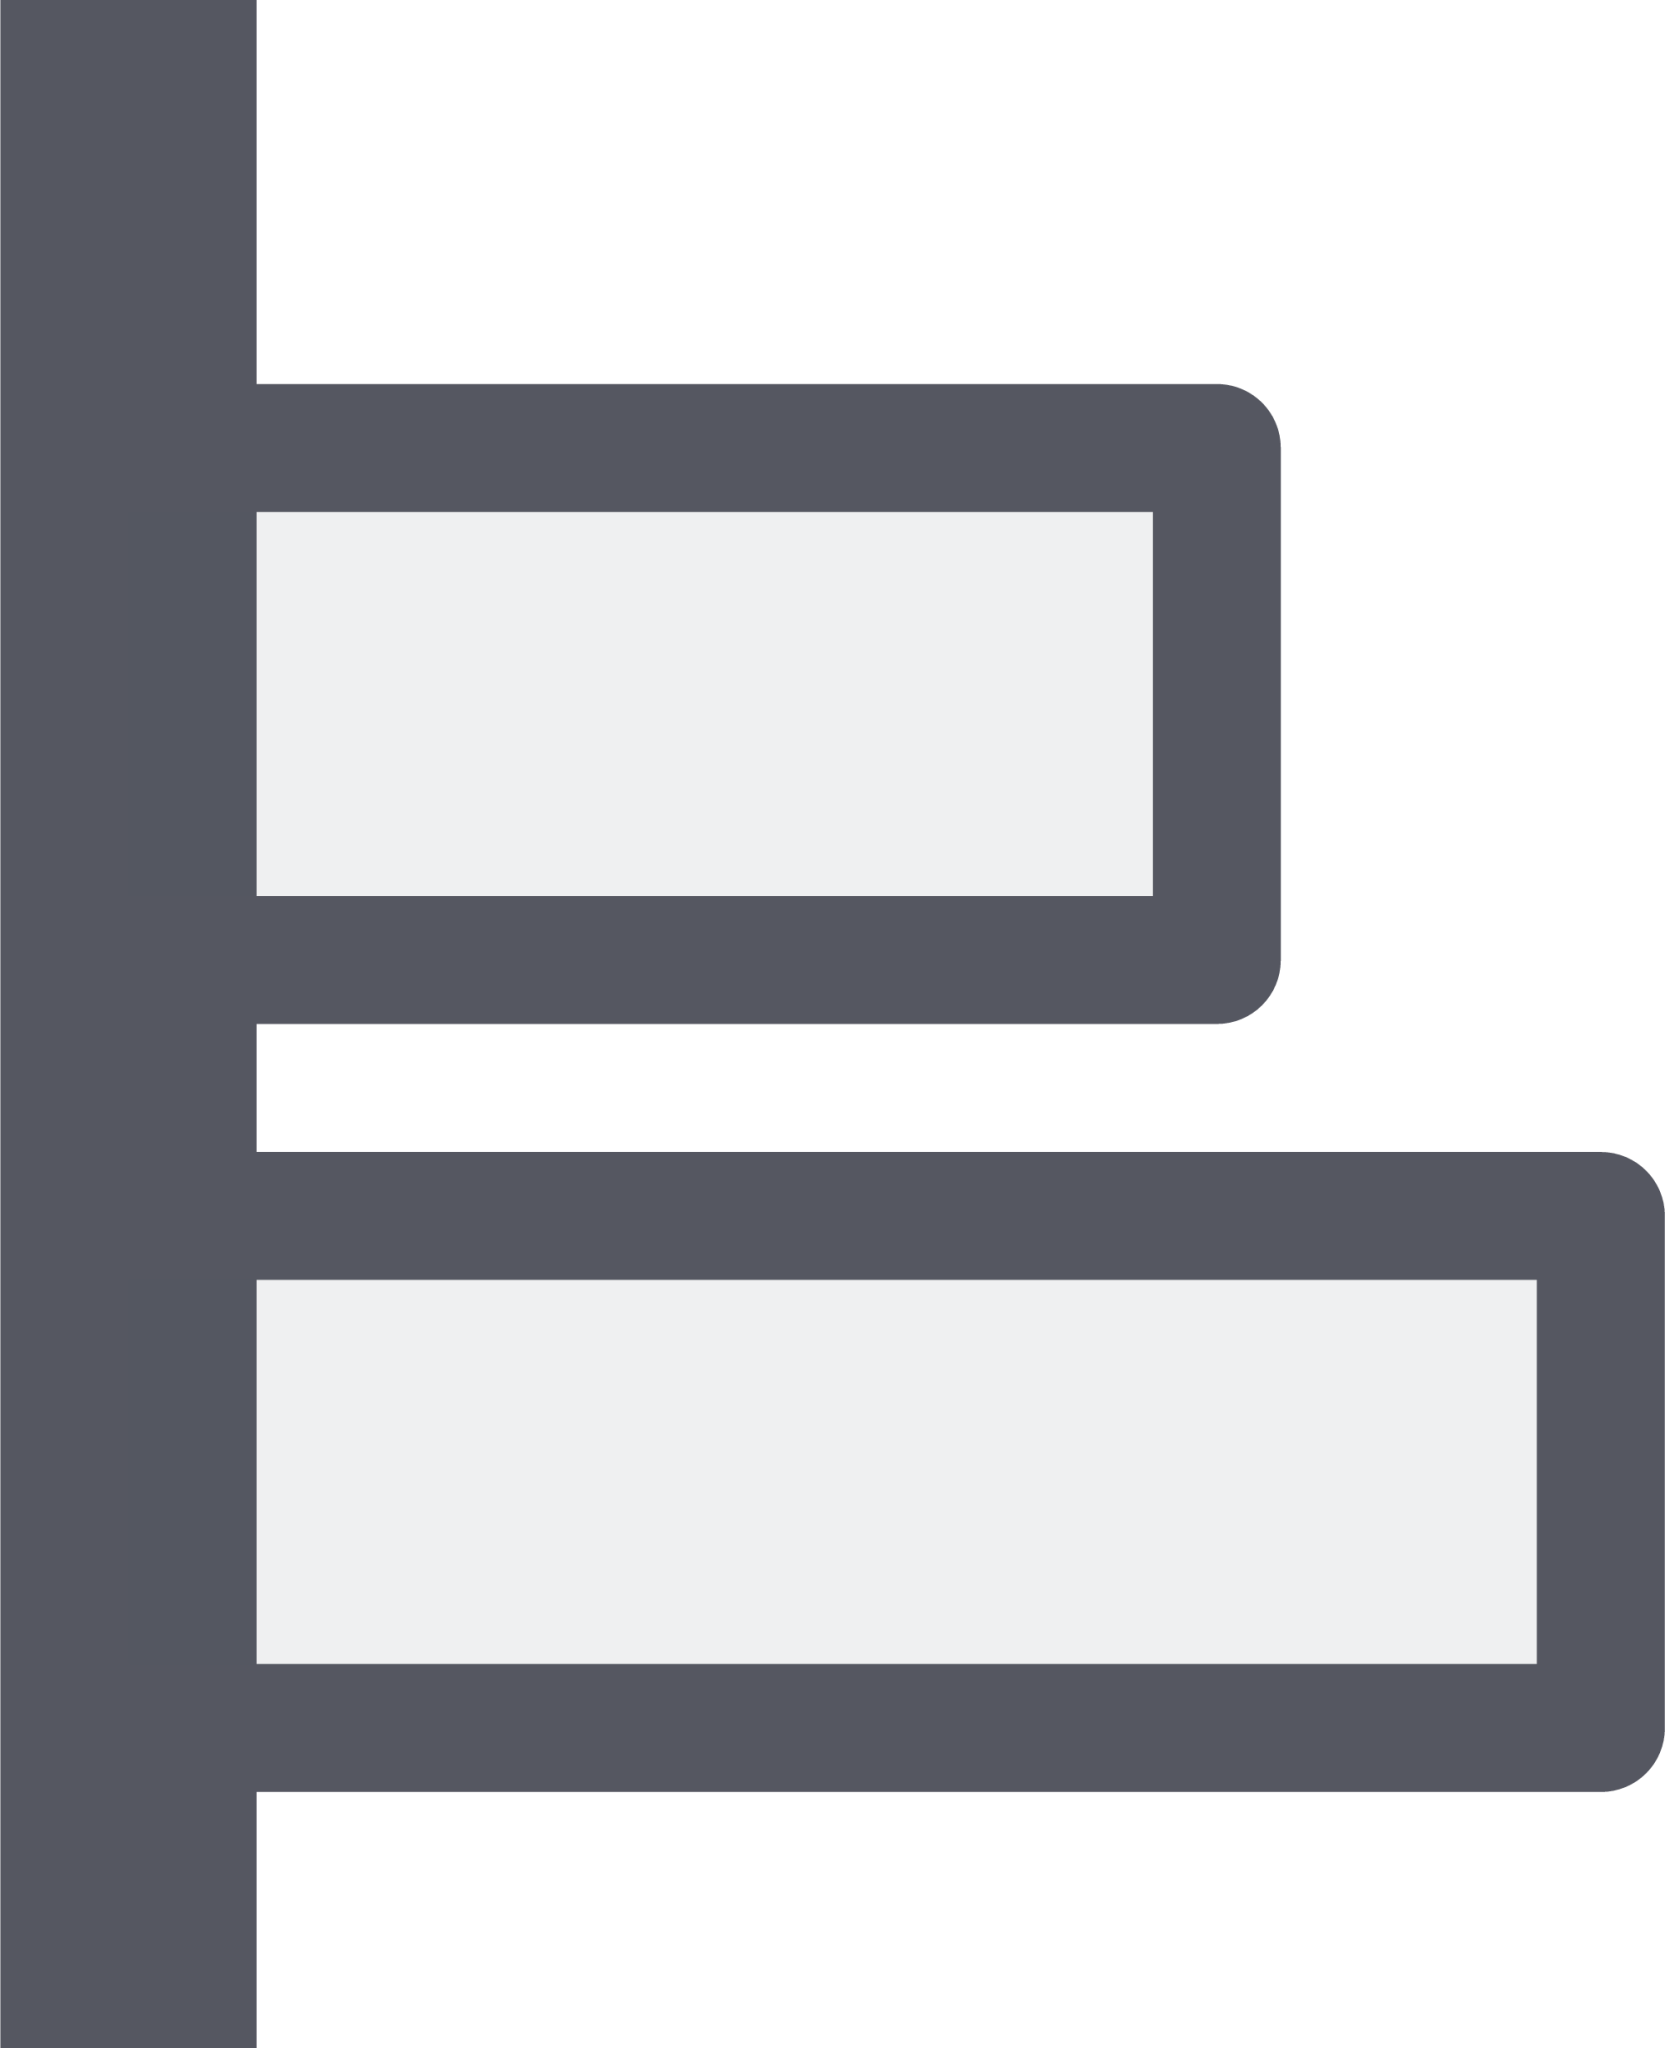 align horizontal left symbolic icon